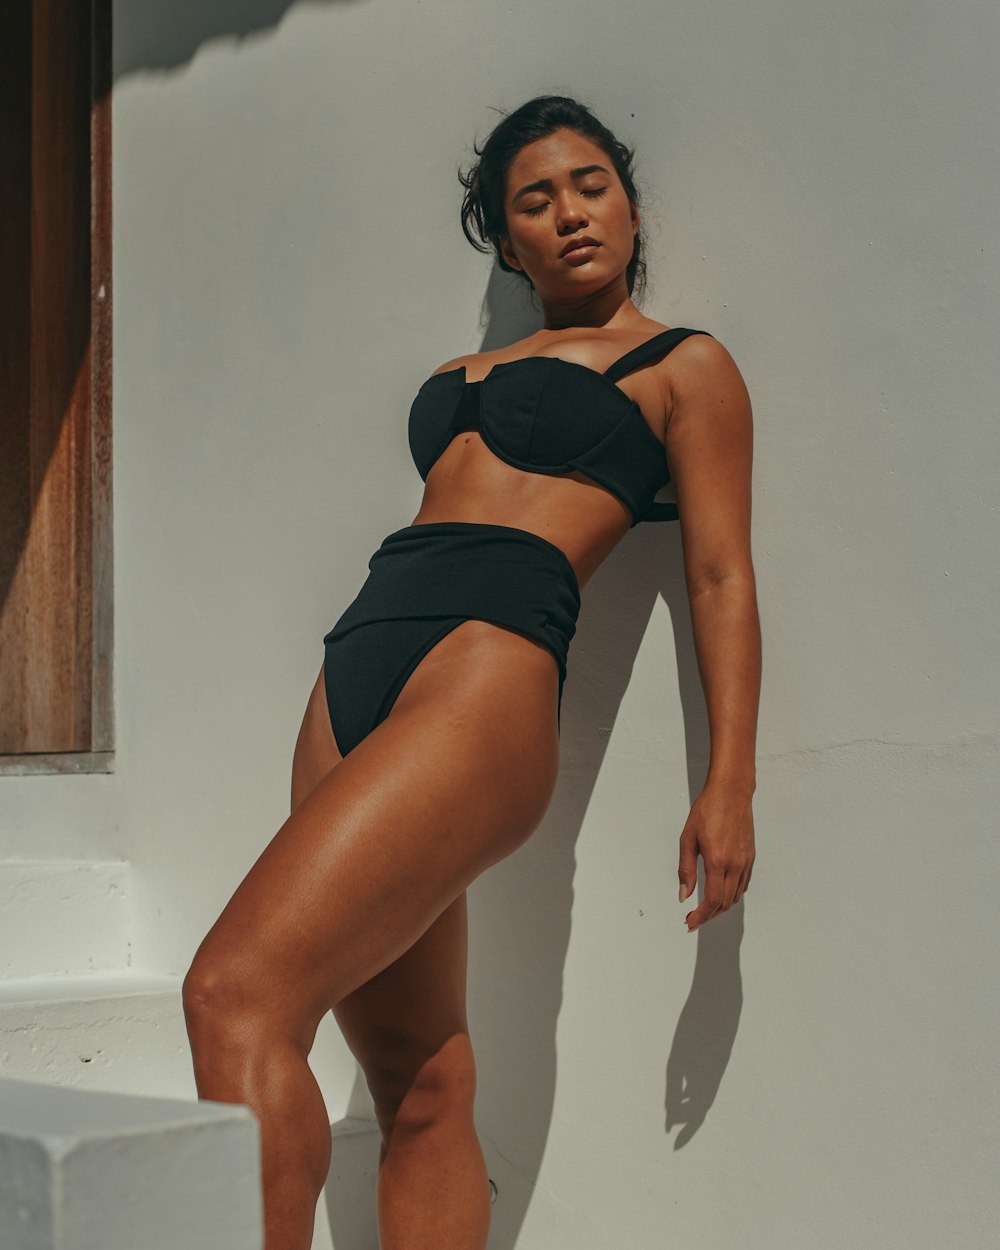 a woman in a bikini leaning against a wall